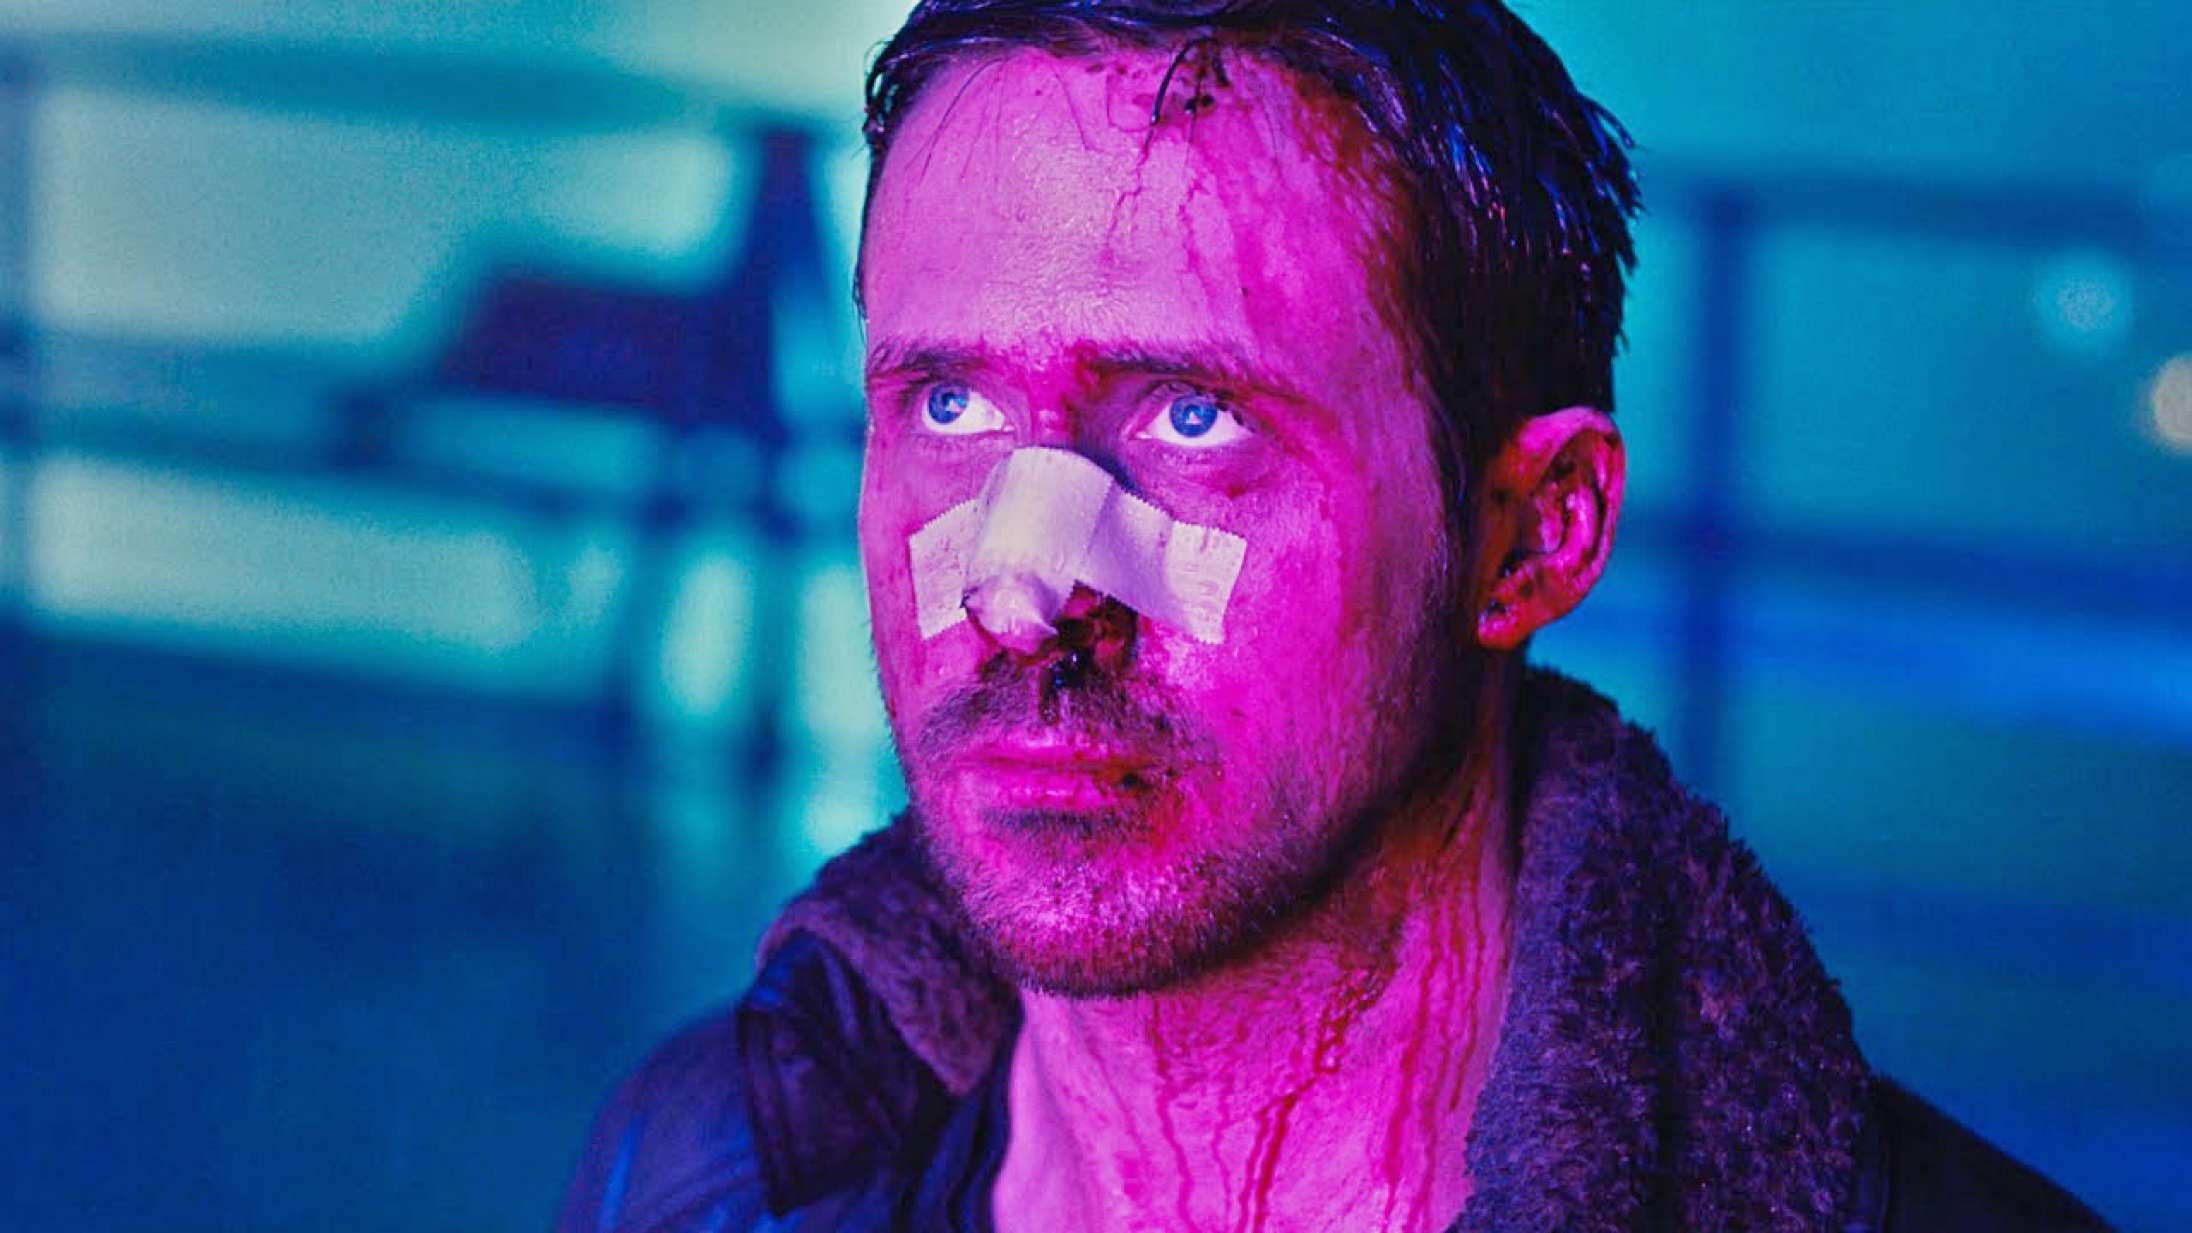 ‘Blade Runner’ bliver til en animationsserie